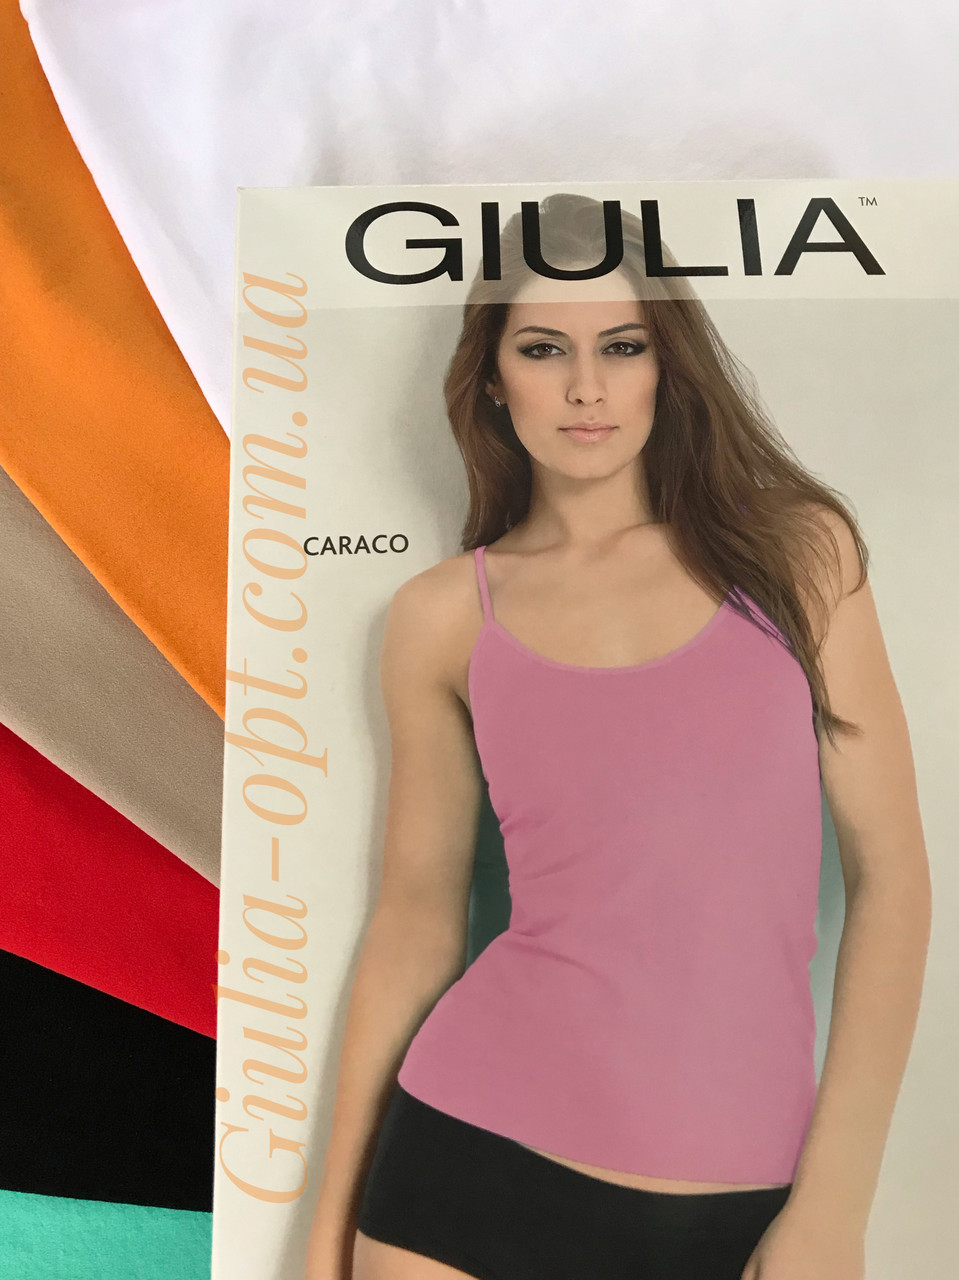 Безшовна майка на тонких бретелях Giulia Caraco футболка домашня повсякденна Повсякденна жіноча нижня білизна